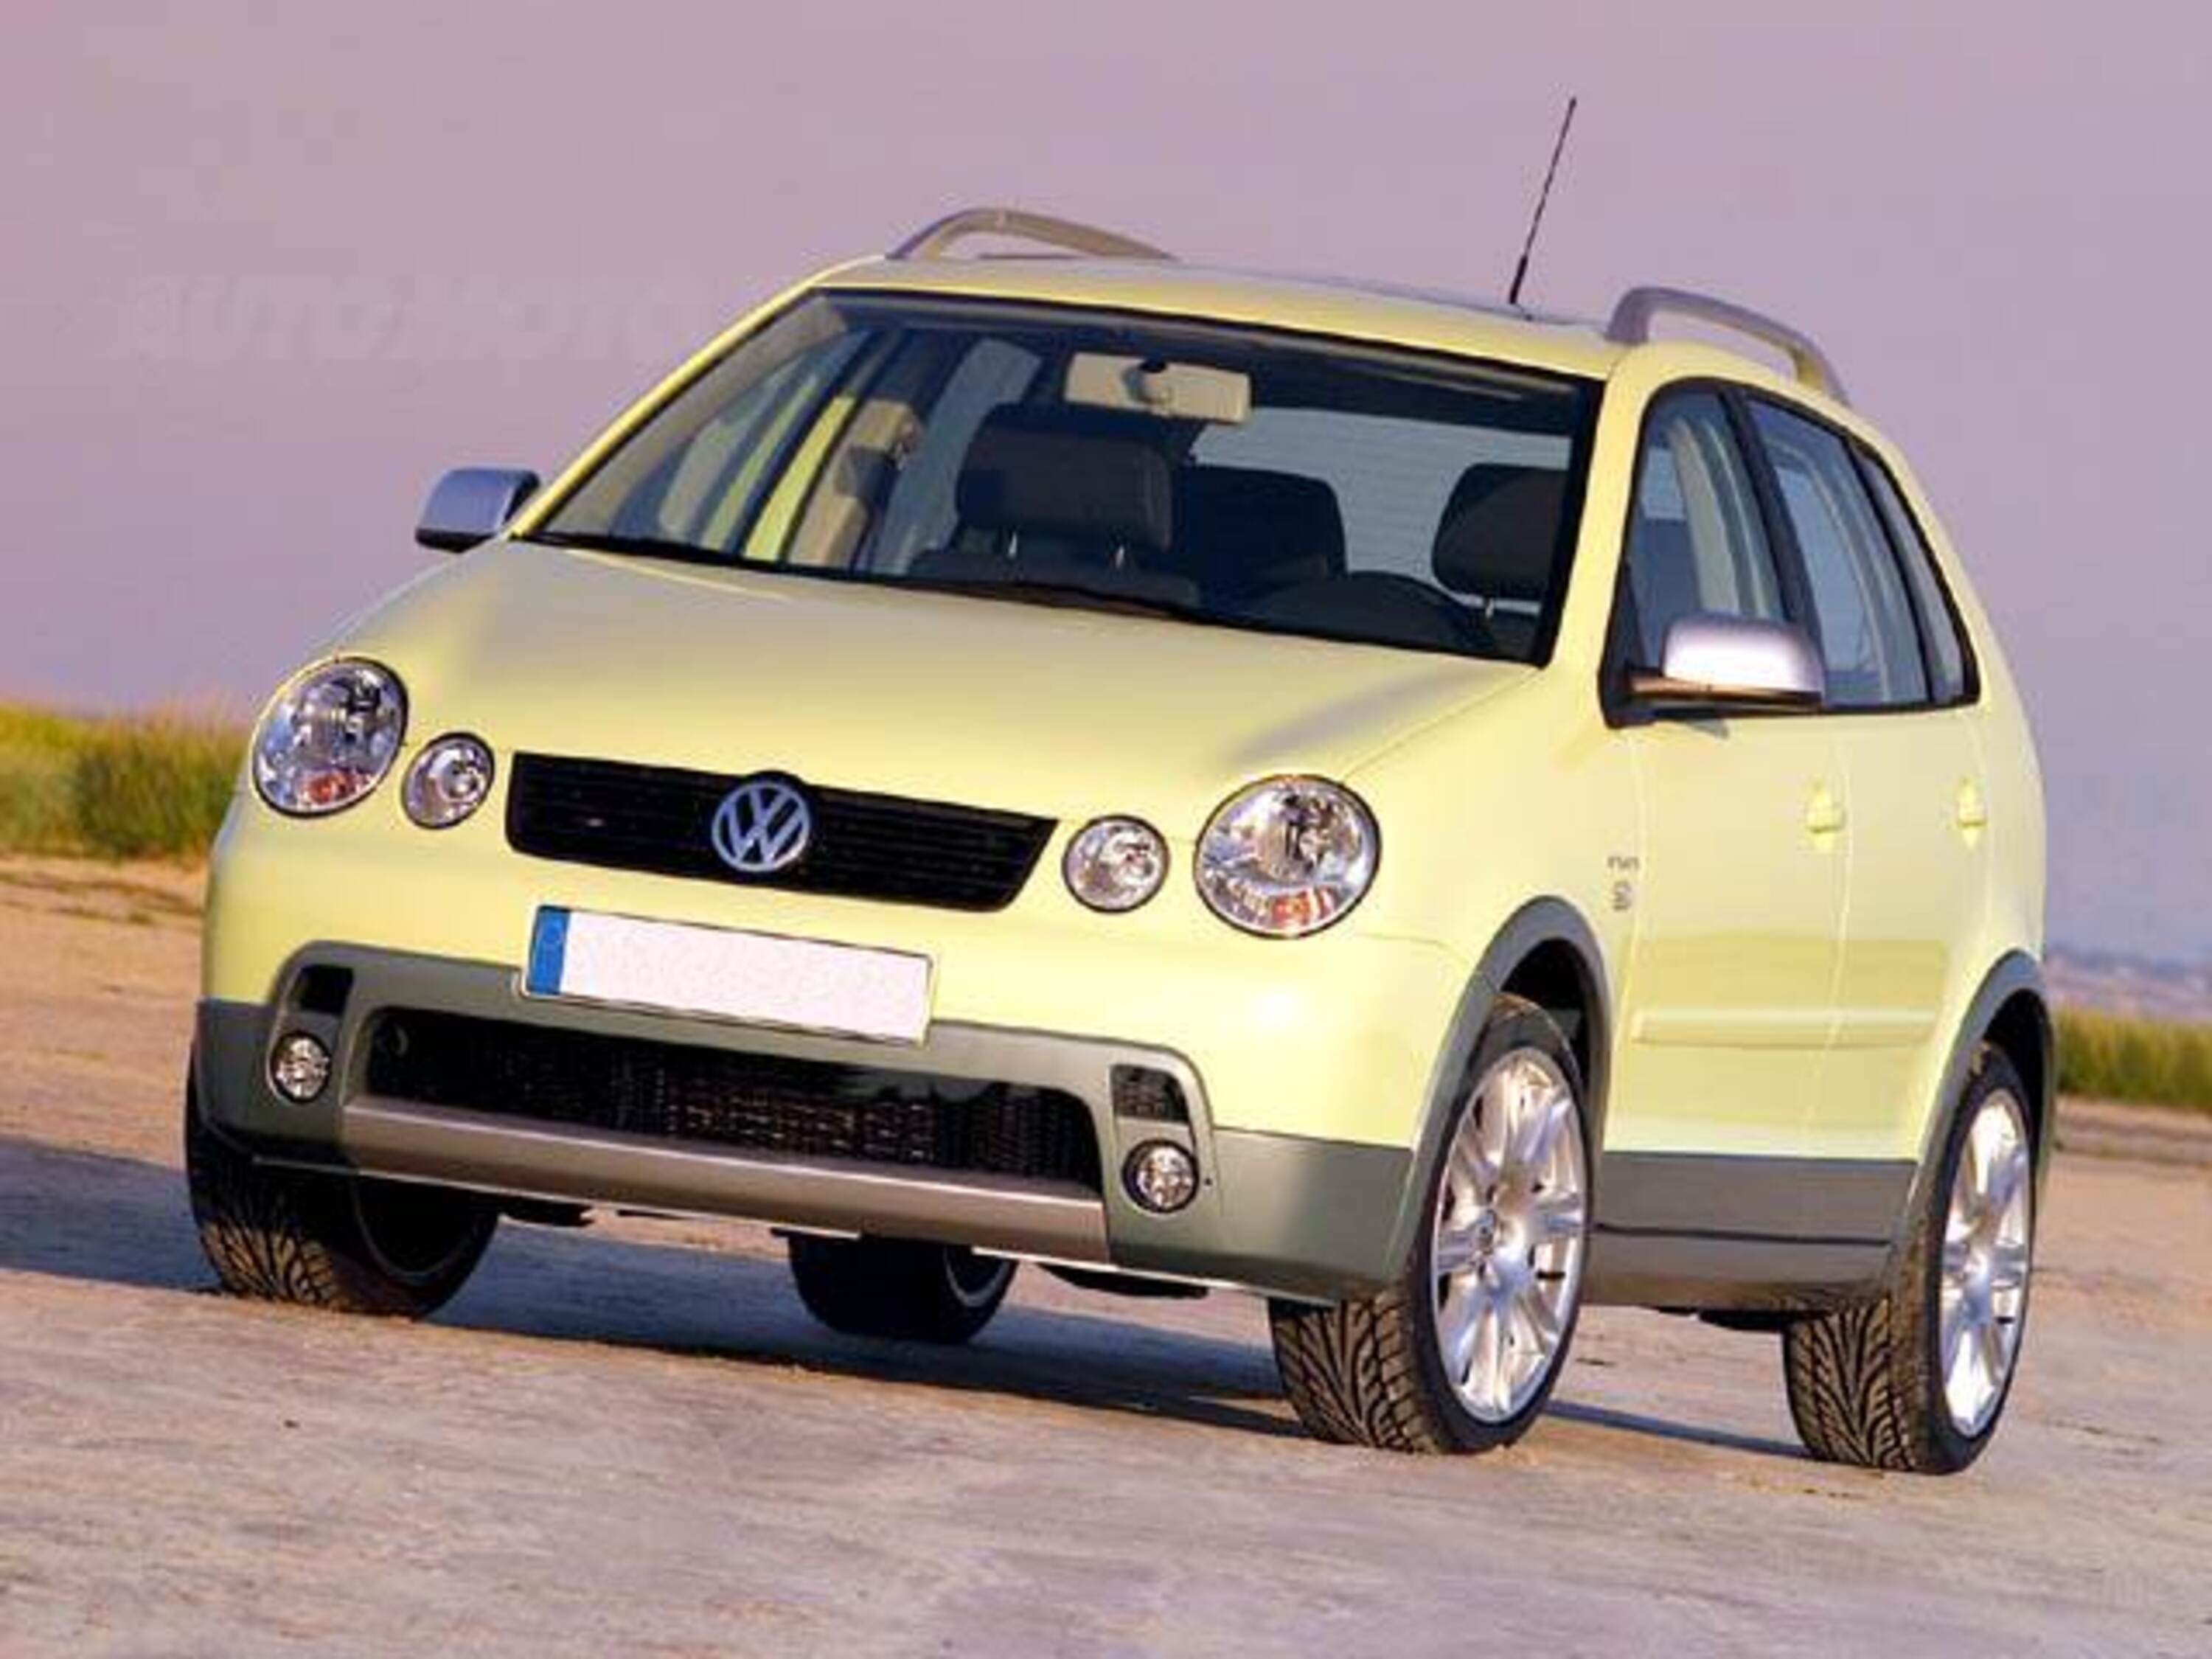 Volkswagen Polo Fun 1.9 TDI